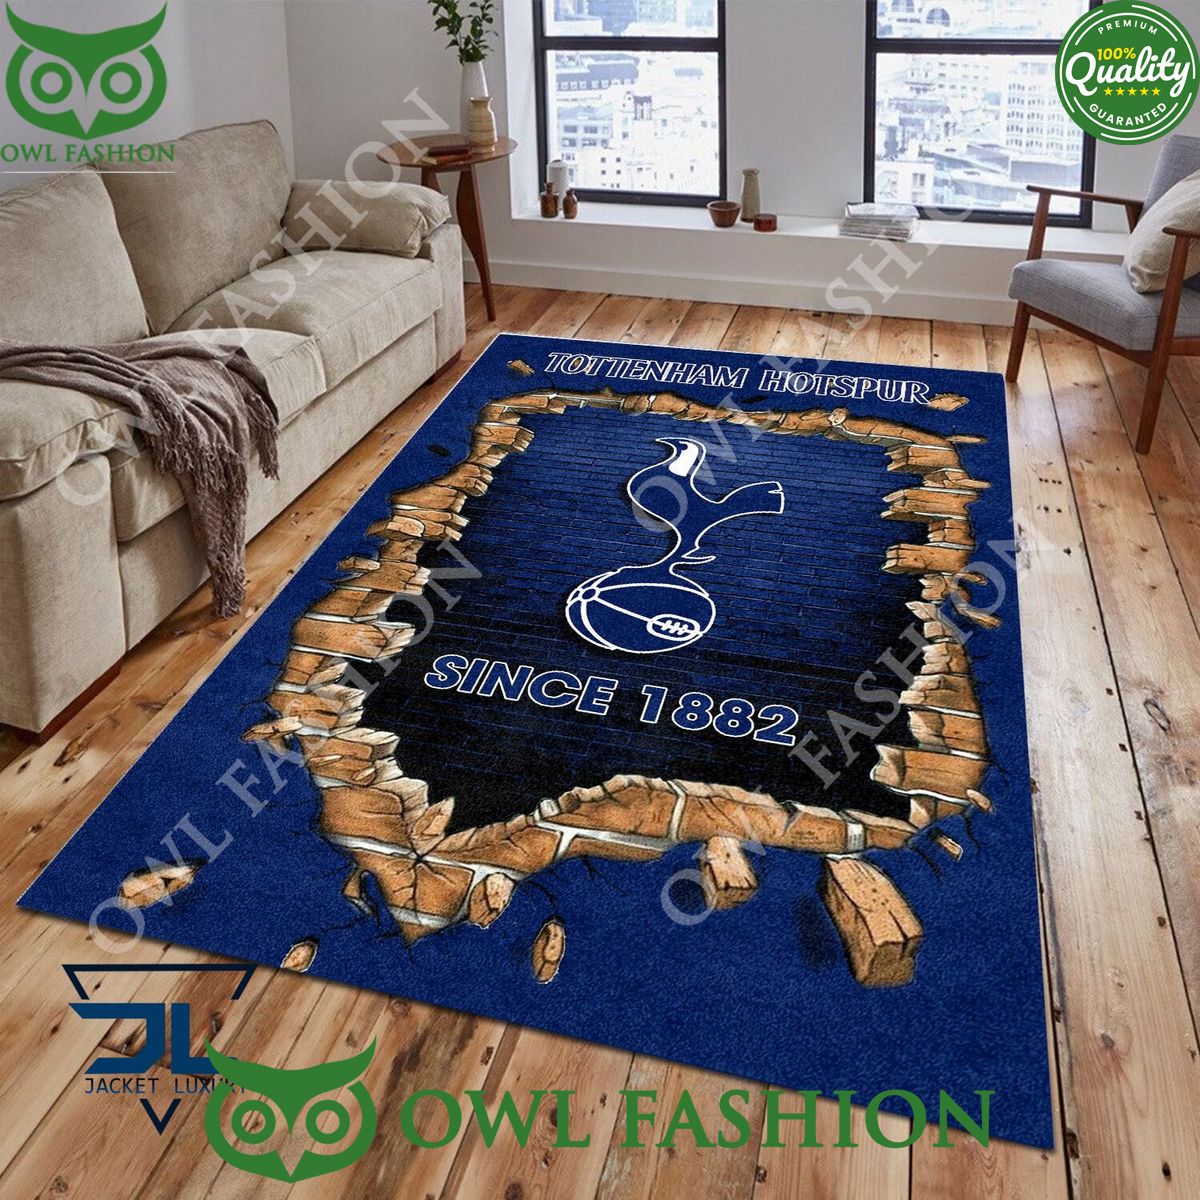 Tottenham Hotspur F.C 1883 Premier League Living Room Carpet